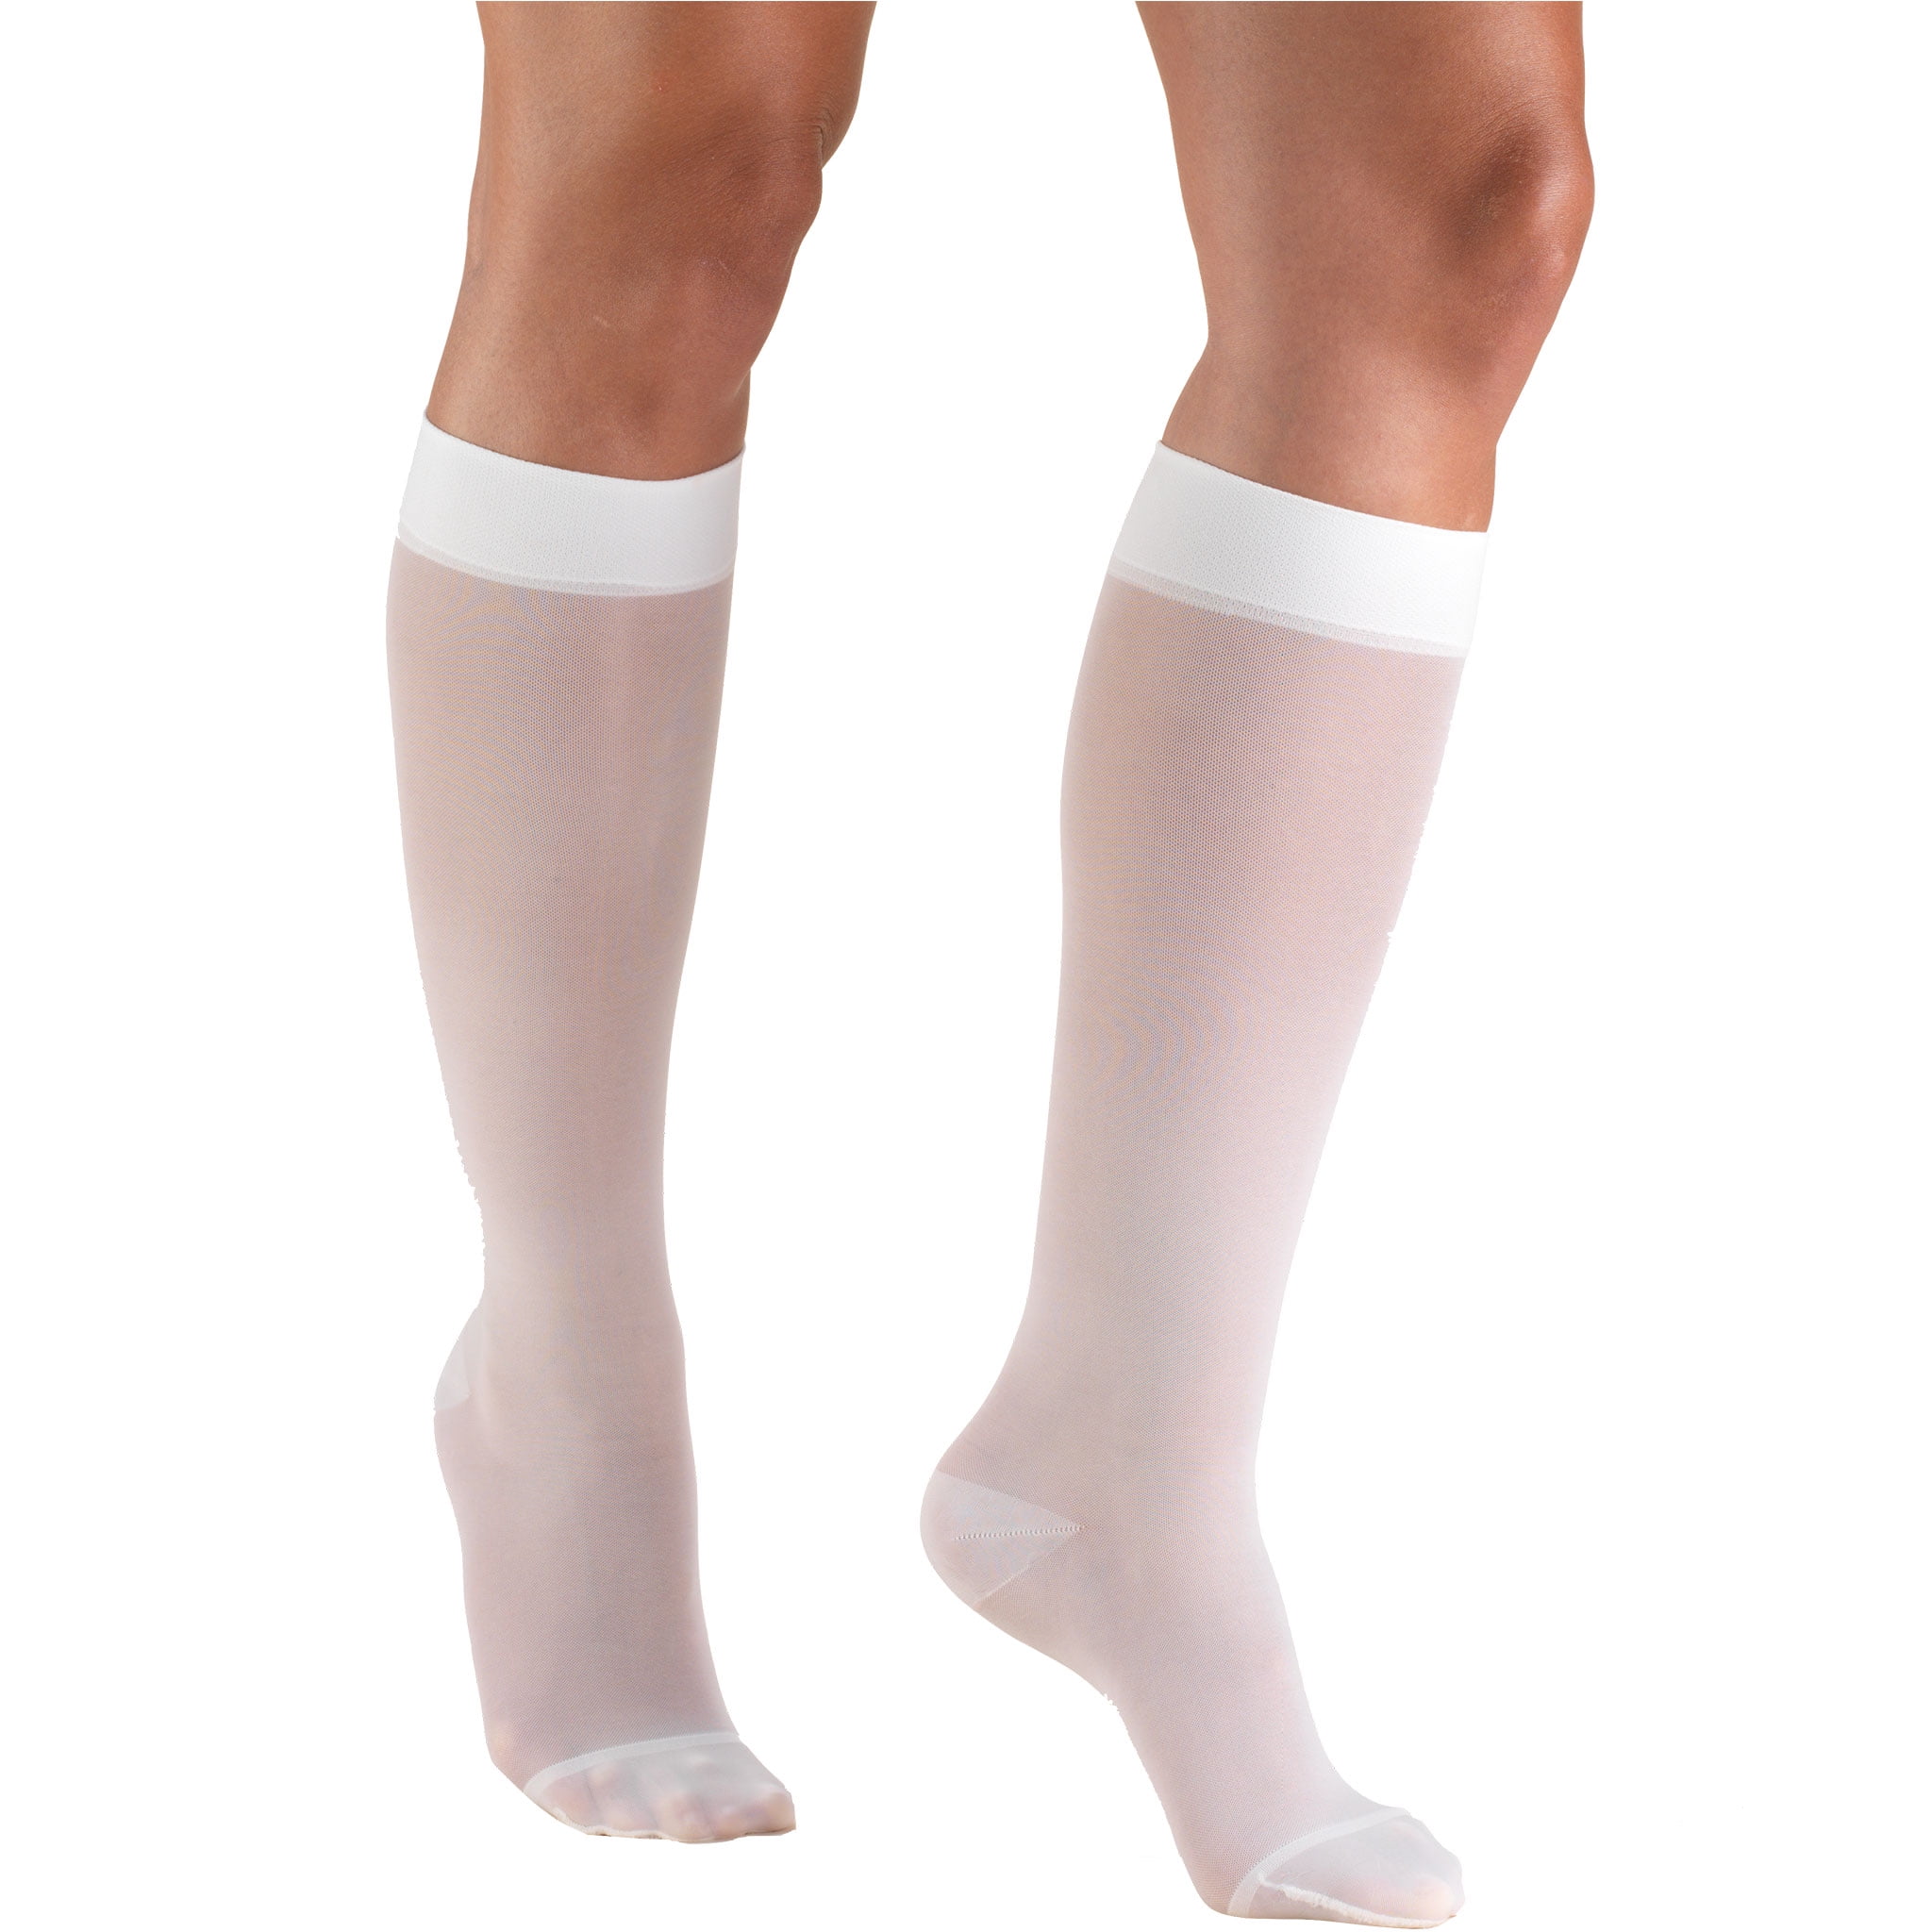 Truform Women's Stockings, Knee High, Sheer: 15-20 mmHg, Beige